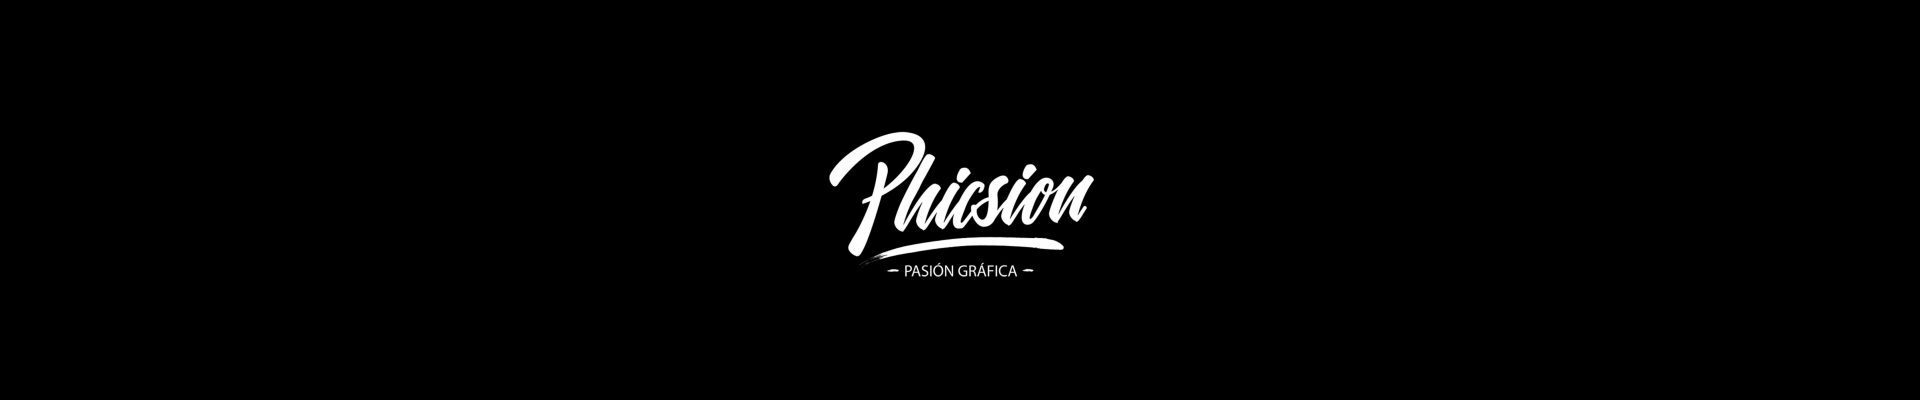 Phicsion